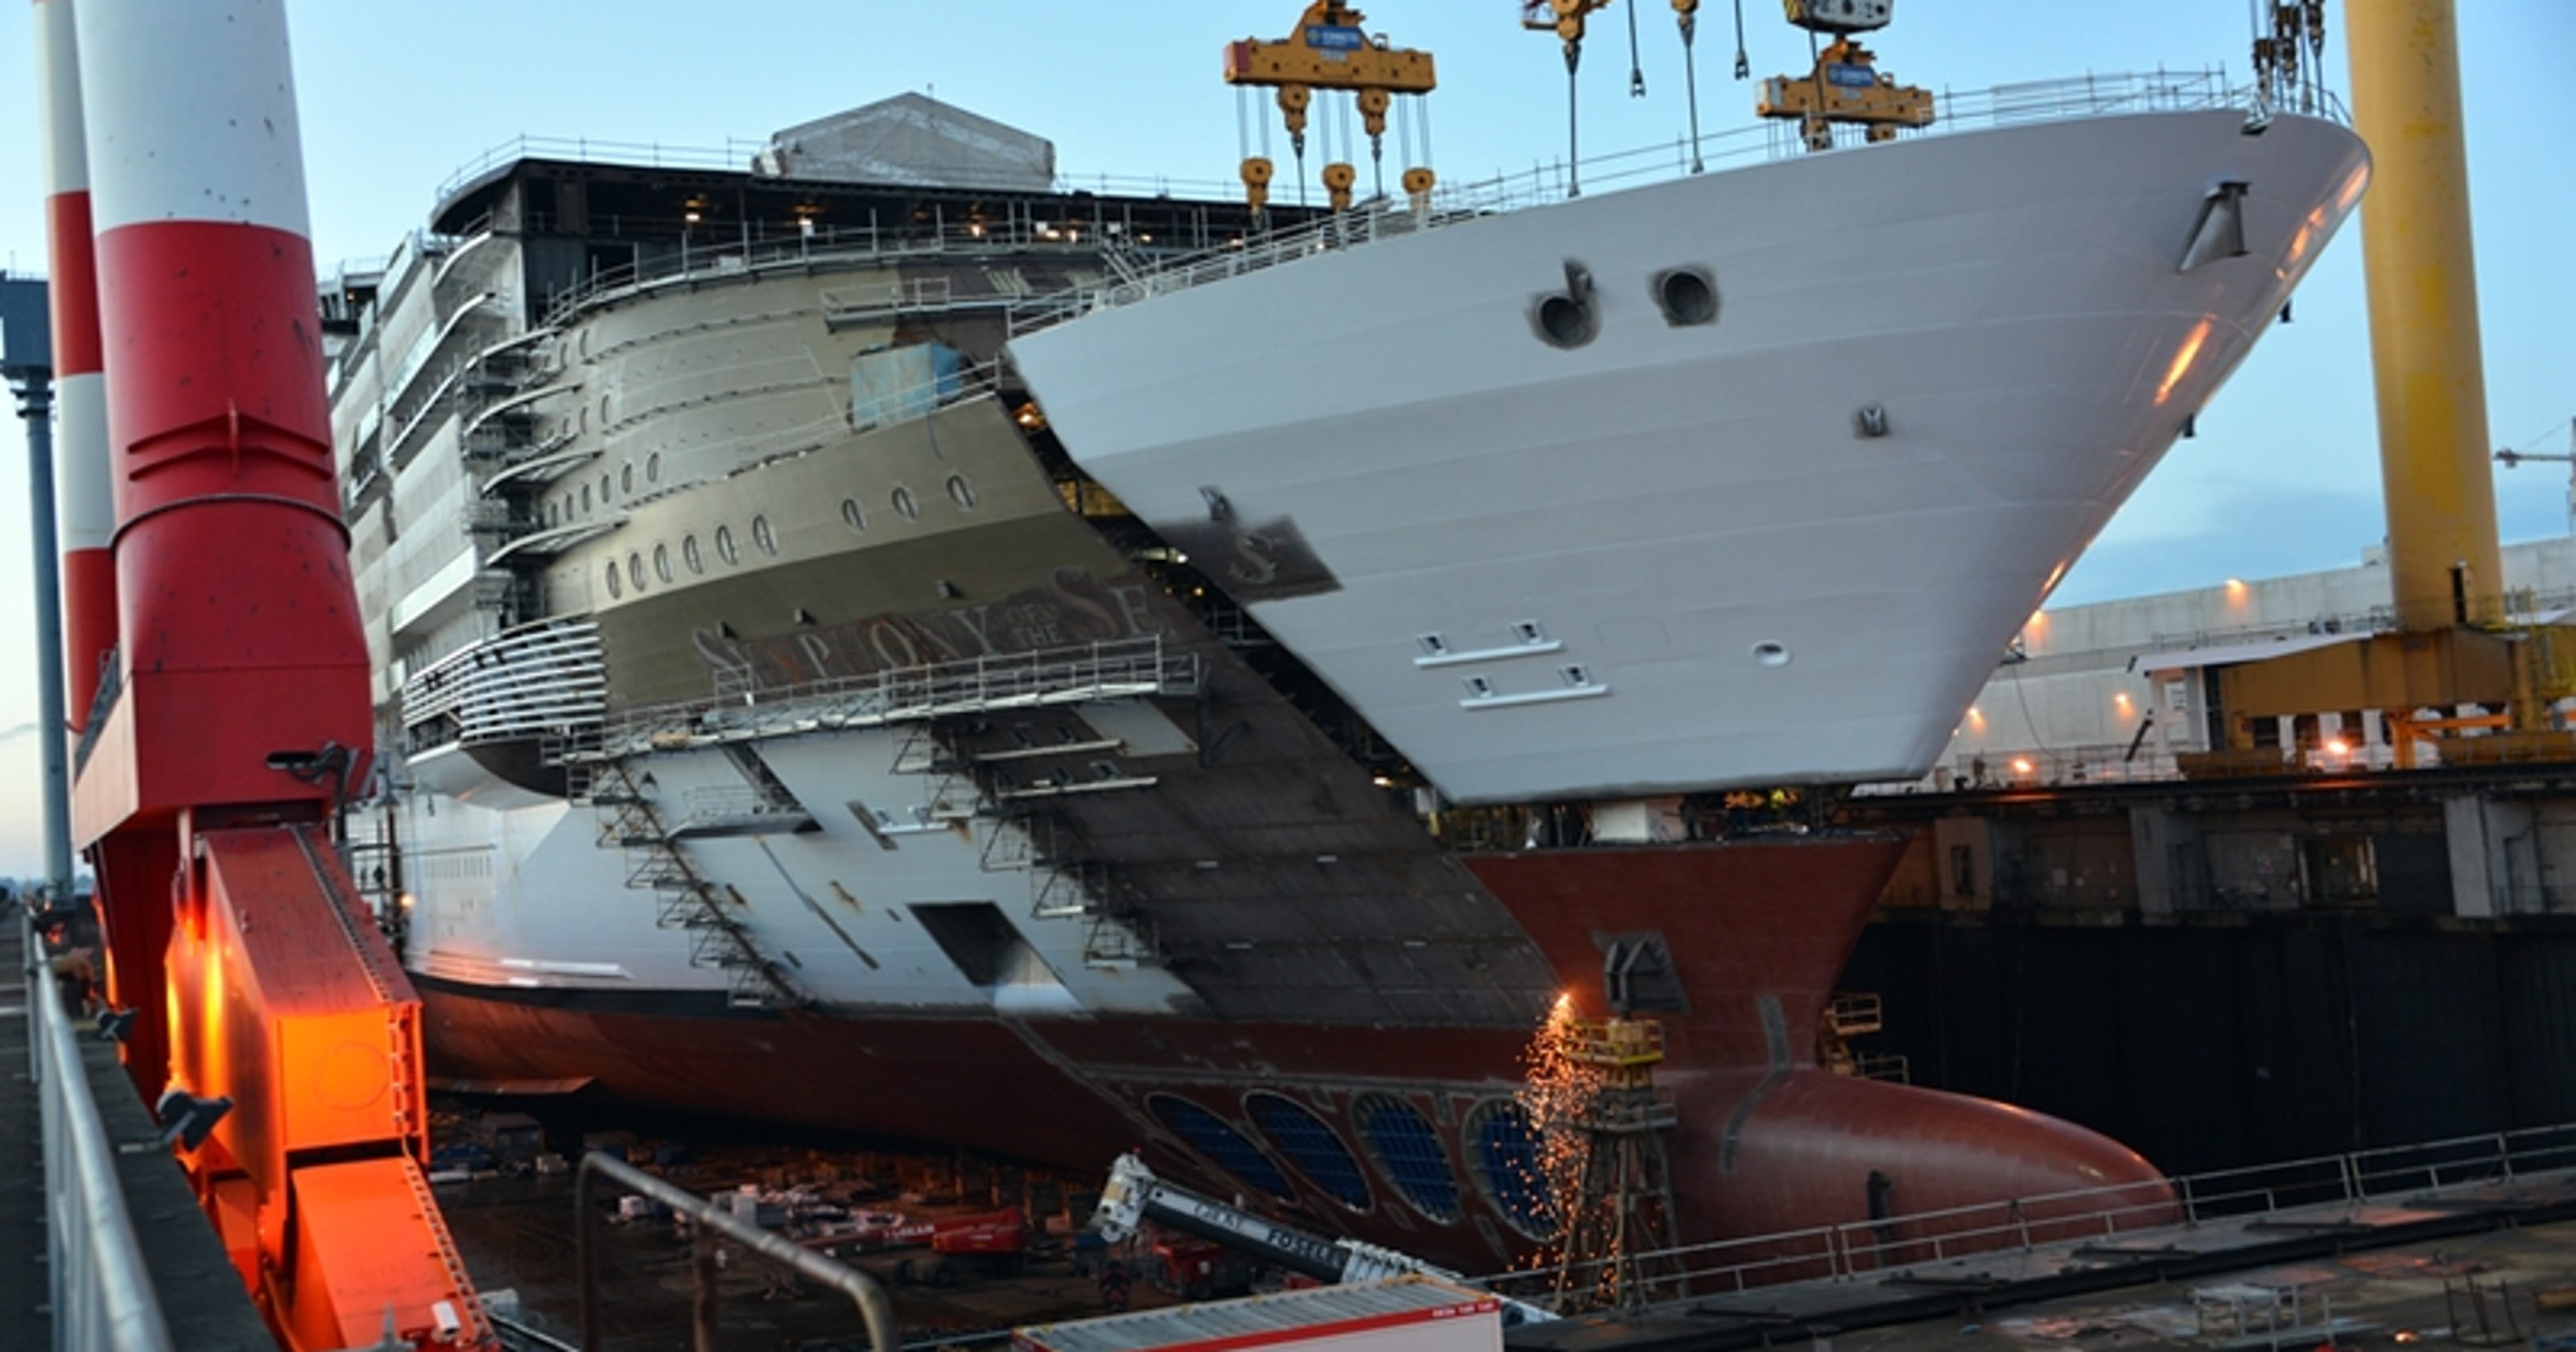 large cruise ship being built